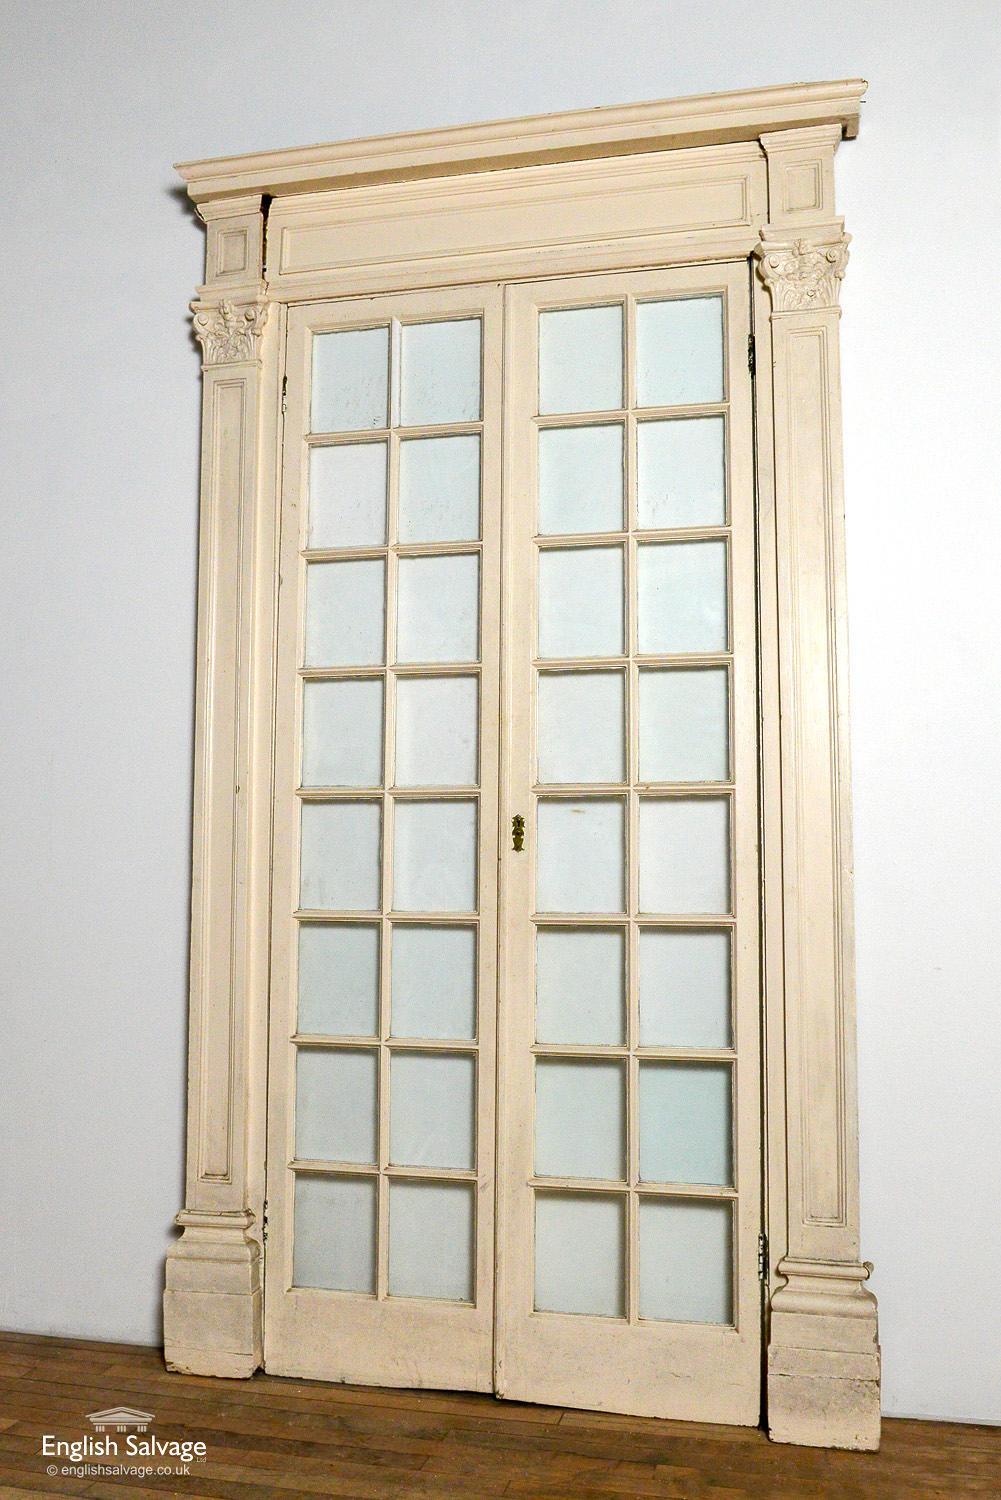 European 19th Century Glazed Doors in Decorative Surround For Sale